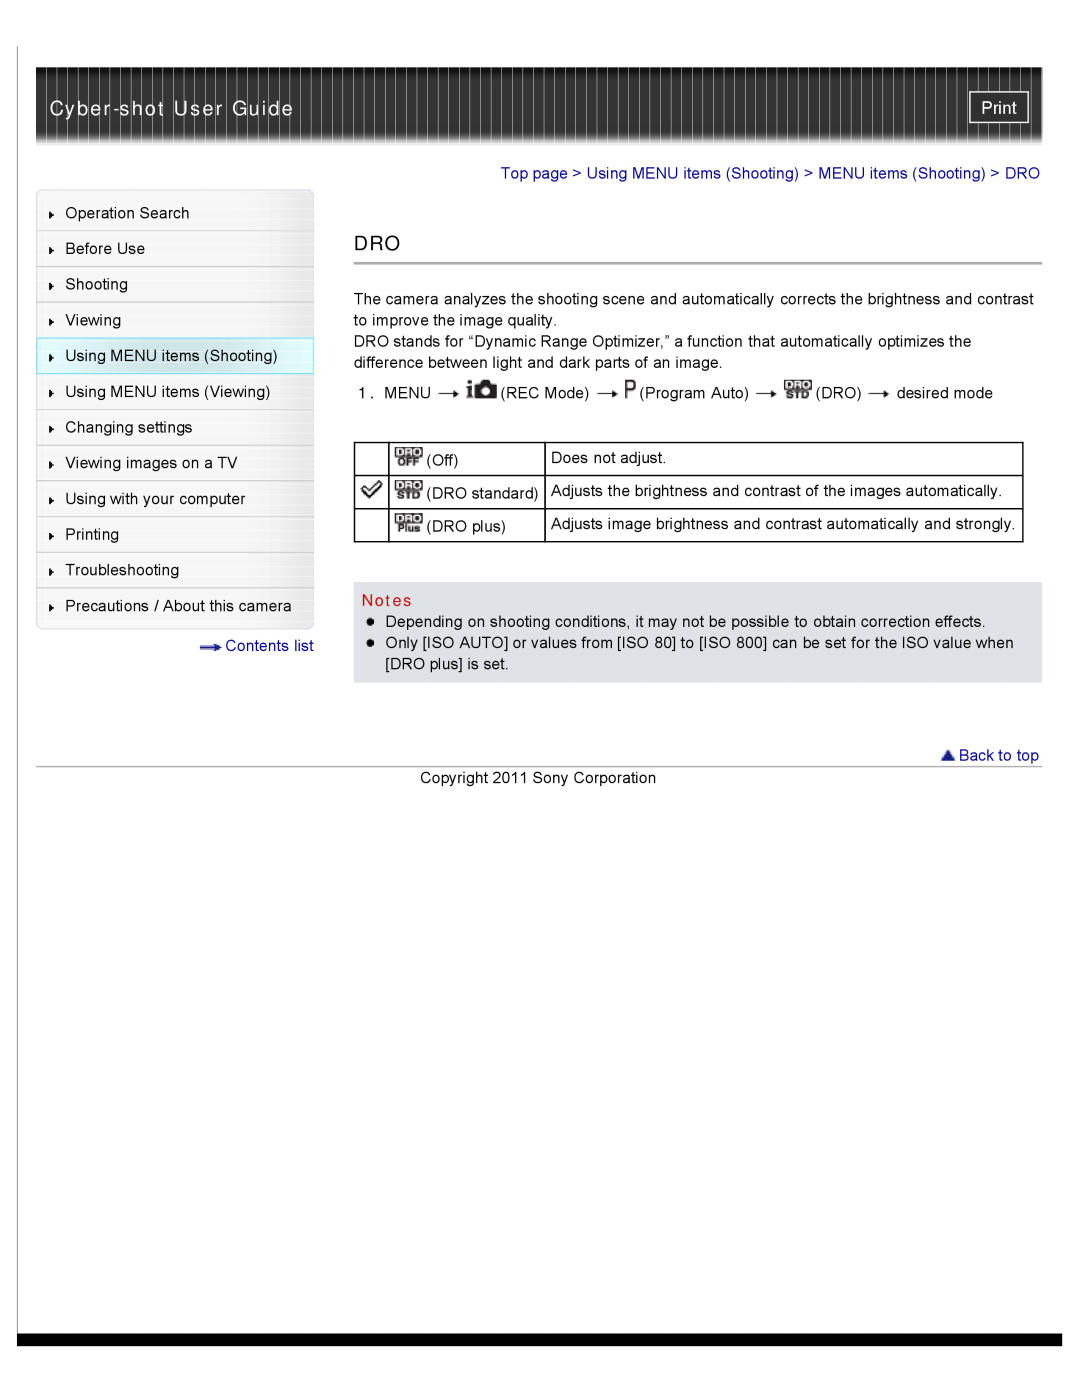 Sony DSC-W510 manual Cyber-shot User Guide, Print, Top page Using MENU items Shooting MENU items Shooting DRO, Back to top 